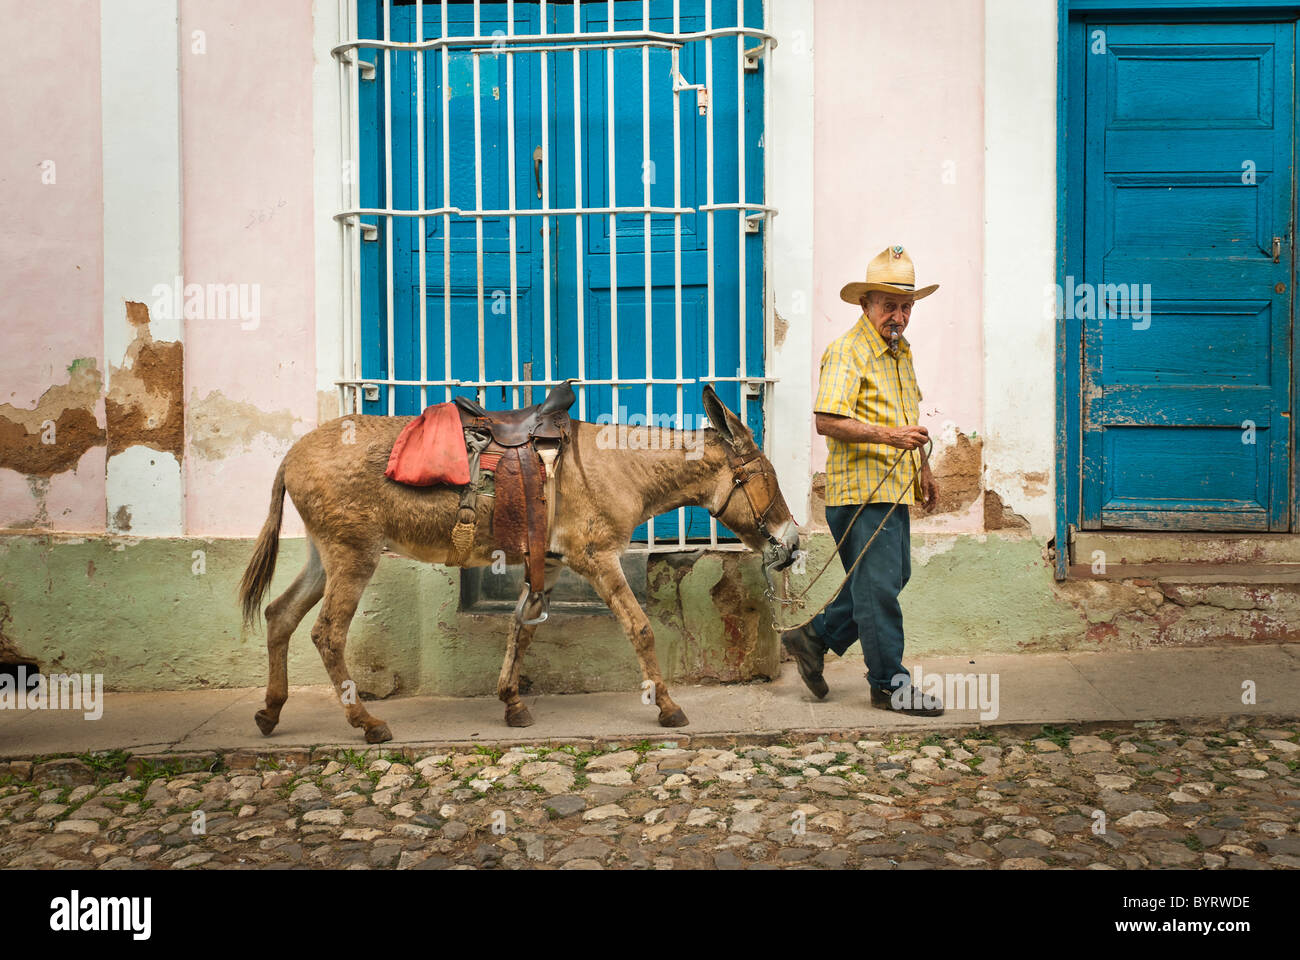 Old man with straw hat walking with his donkey , Trinidad, Sancti Spiritus, Cuba, Caribbean. Stock Photo